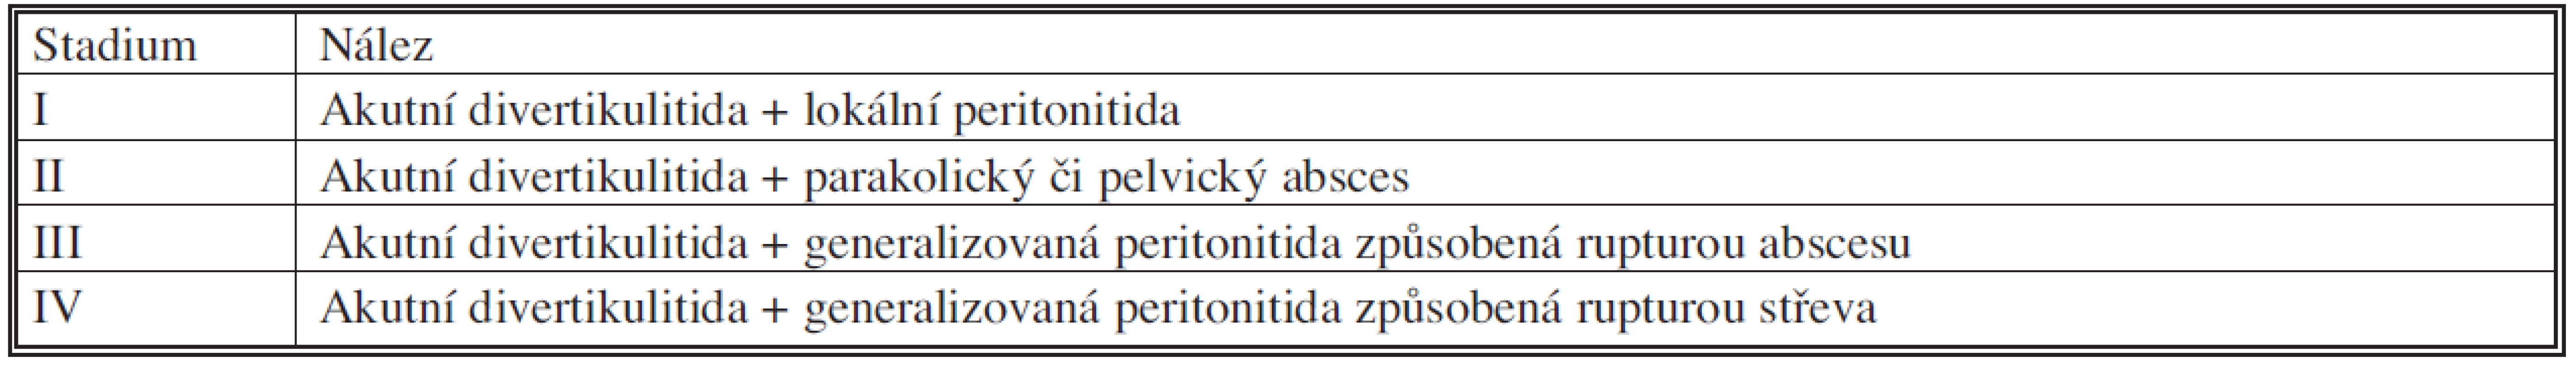 Klasifikace komplikované divertikulitidy podle Huhgese [45]
Tab. 5. Hughes classification of complicated diverticulitis (1963)